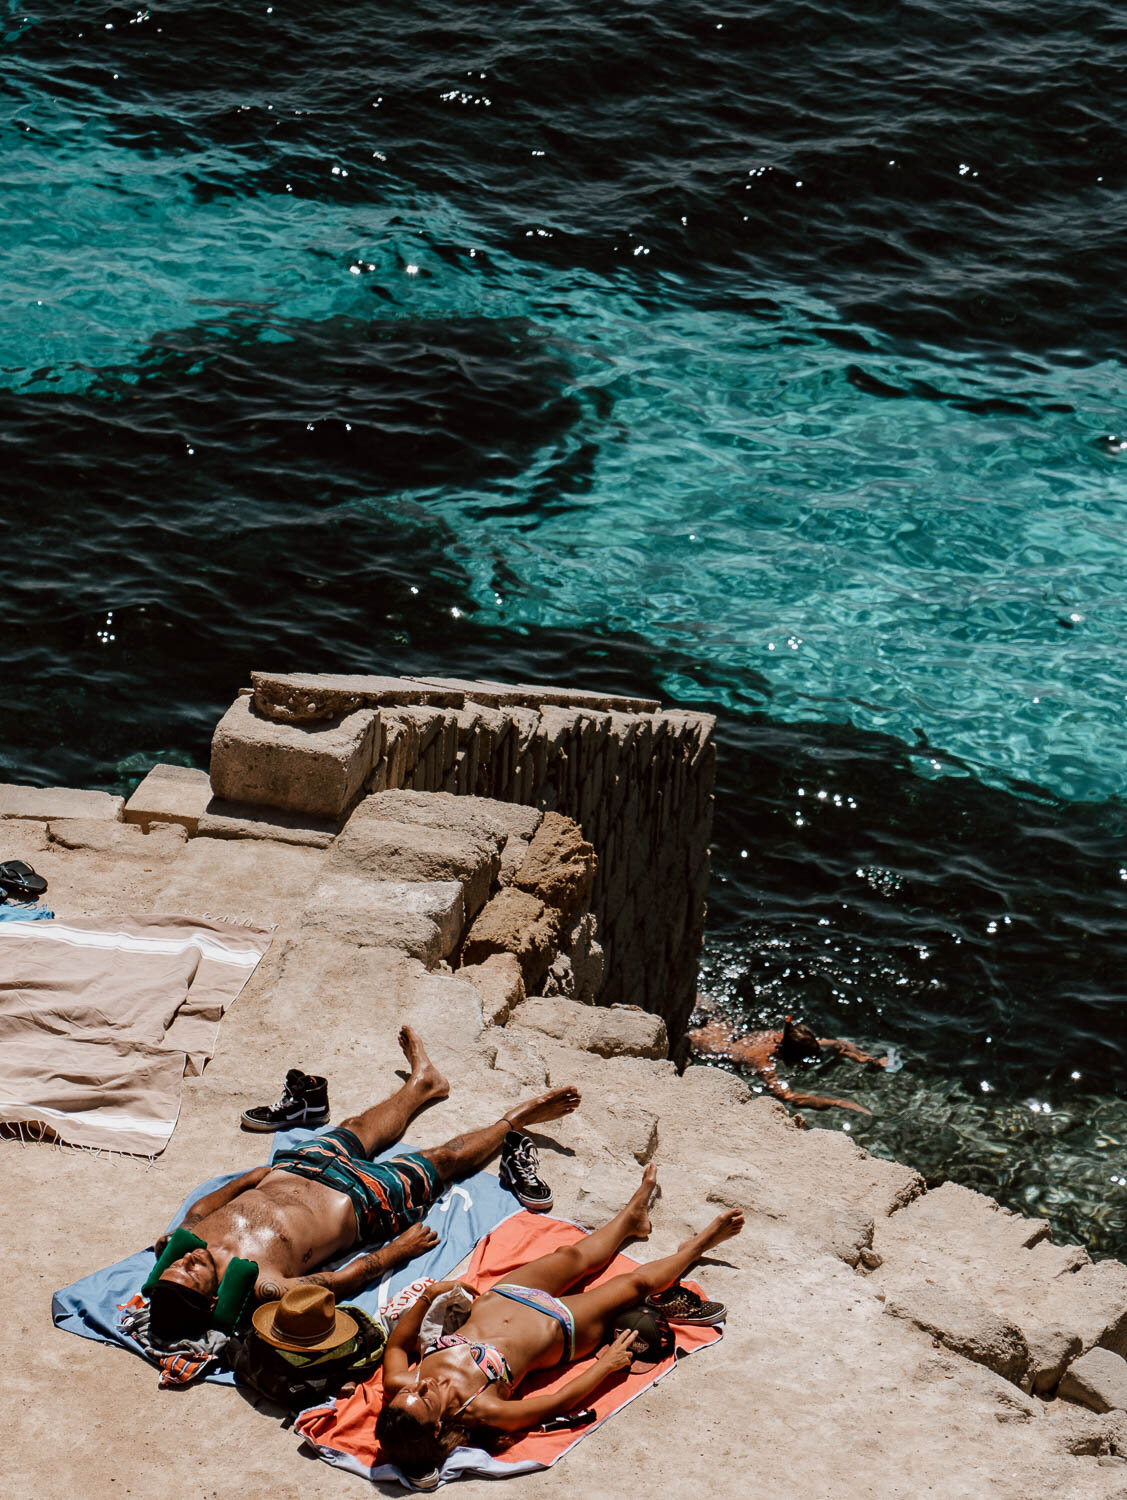 Sunbathers at Bus Marina, Favignana